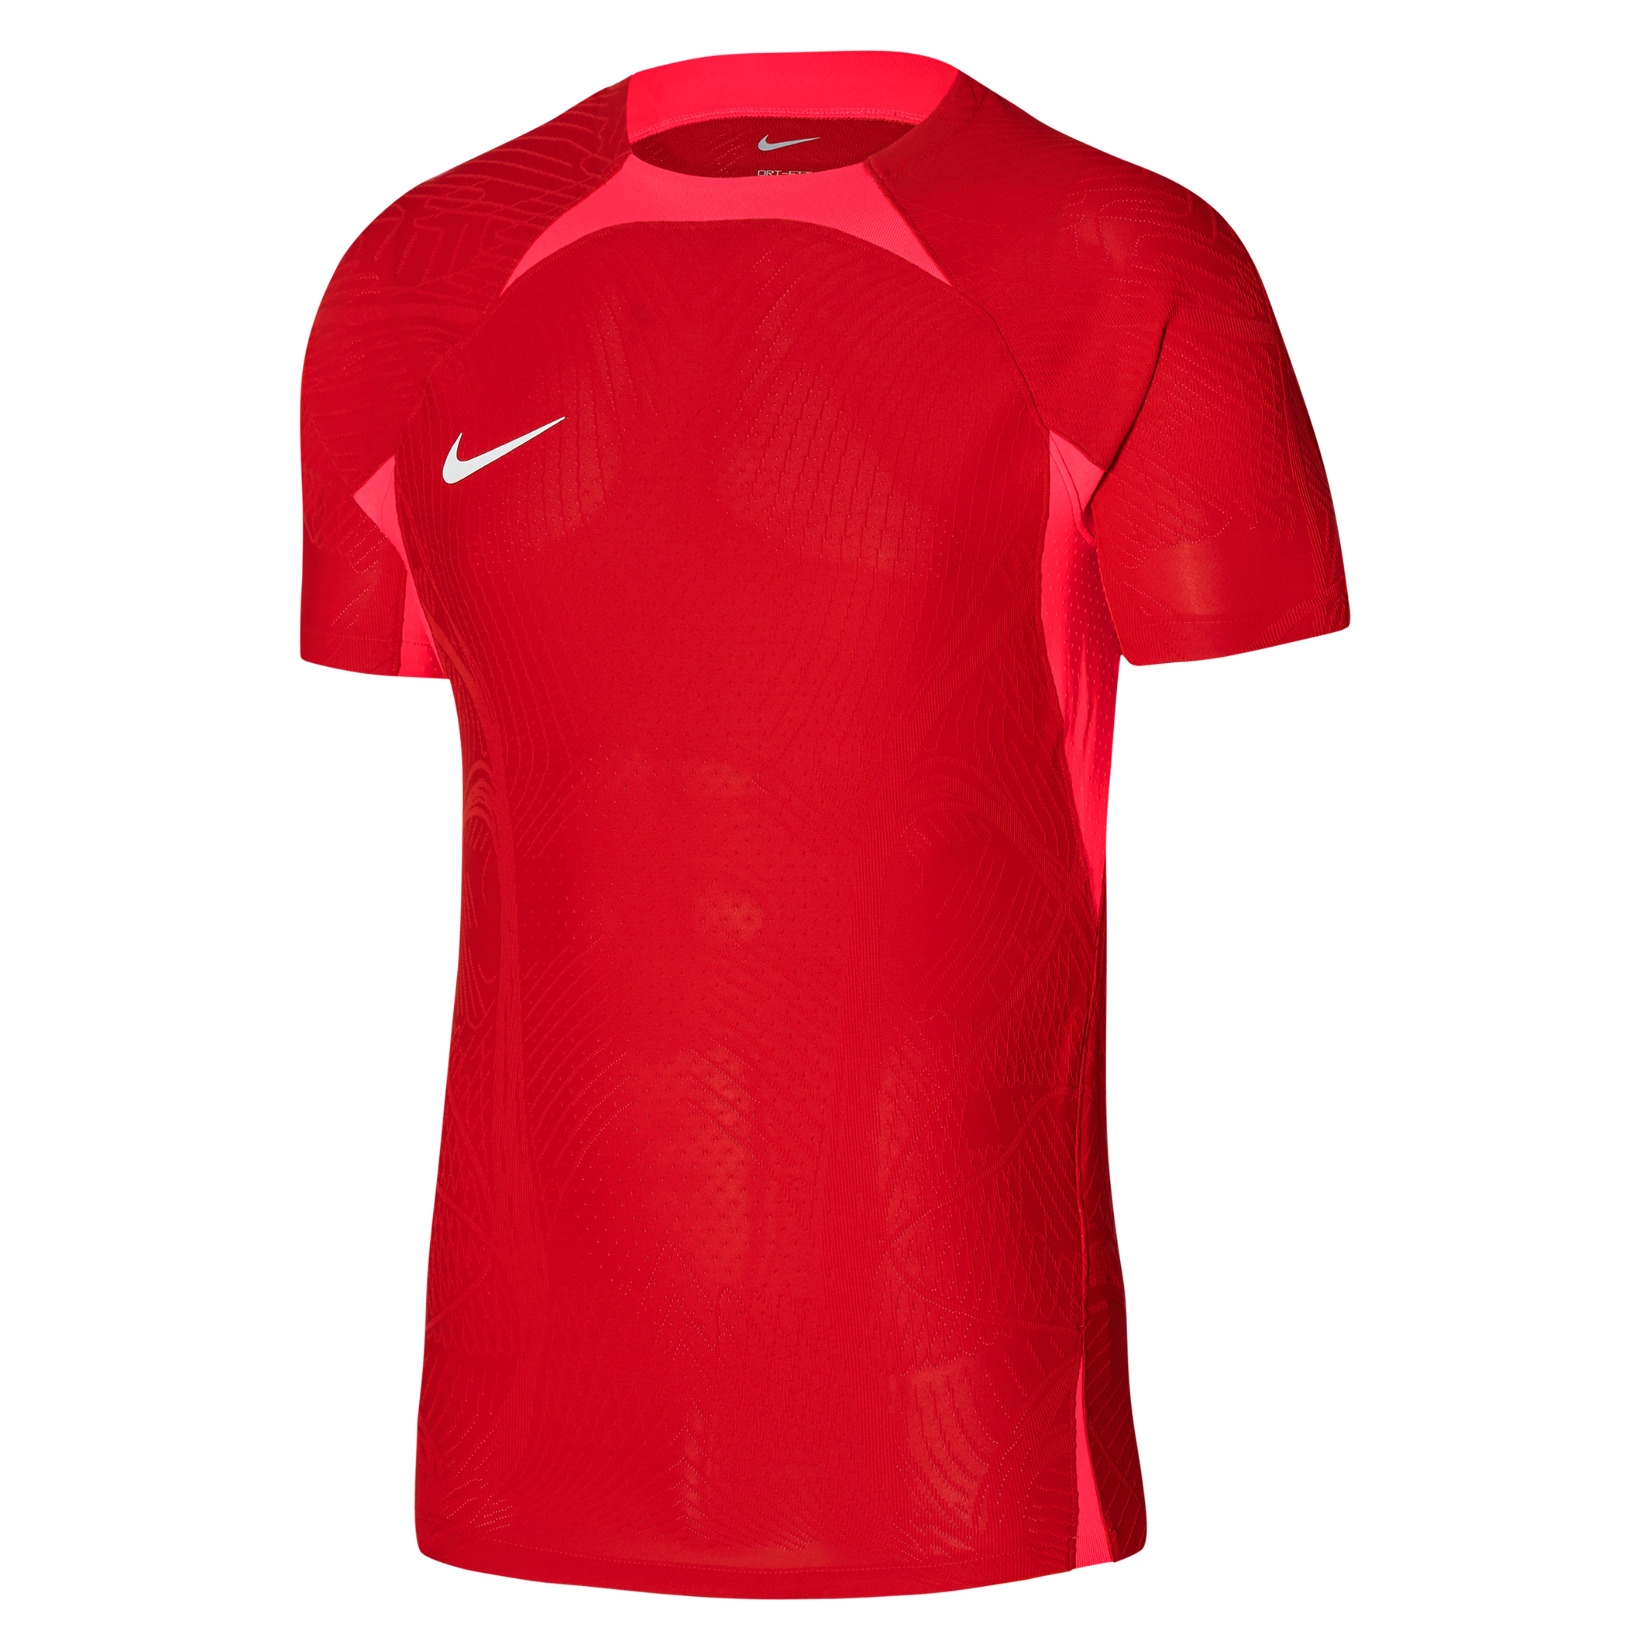 Introducing: Nike 23 Football Match Kits